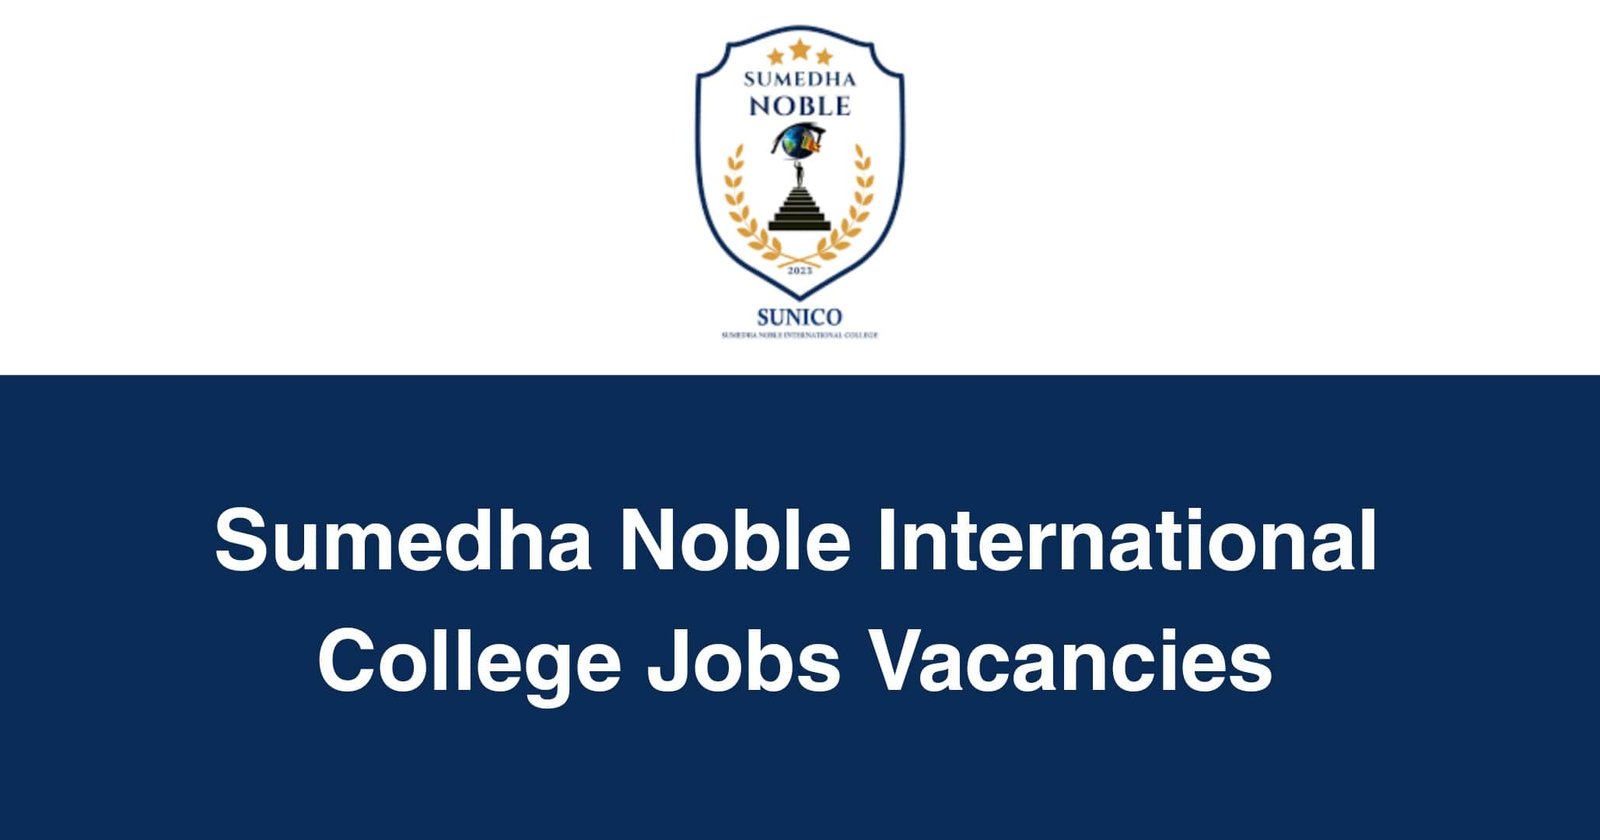 Sumedha Noble International College Jobs Vacancies